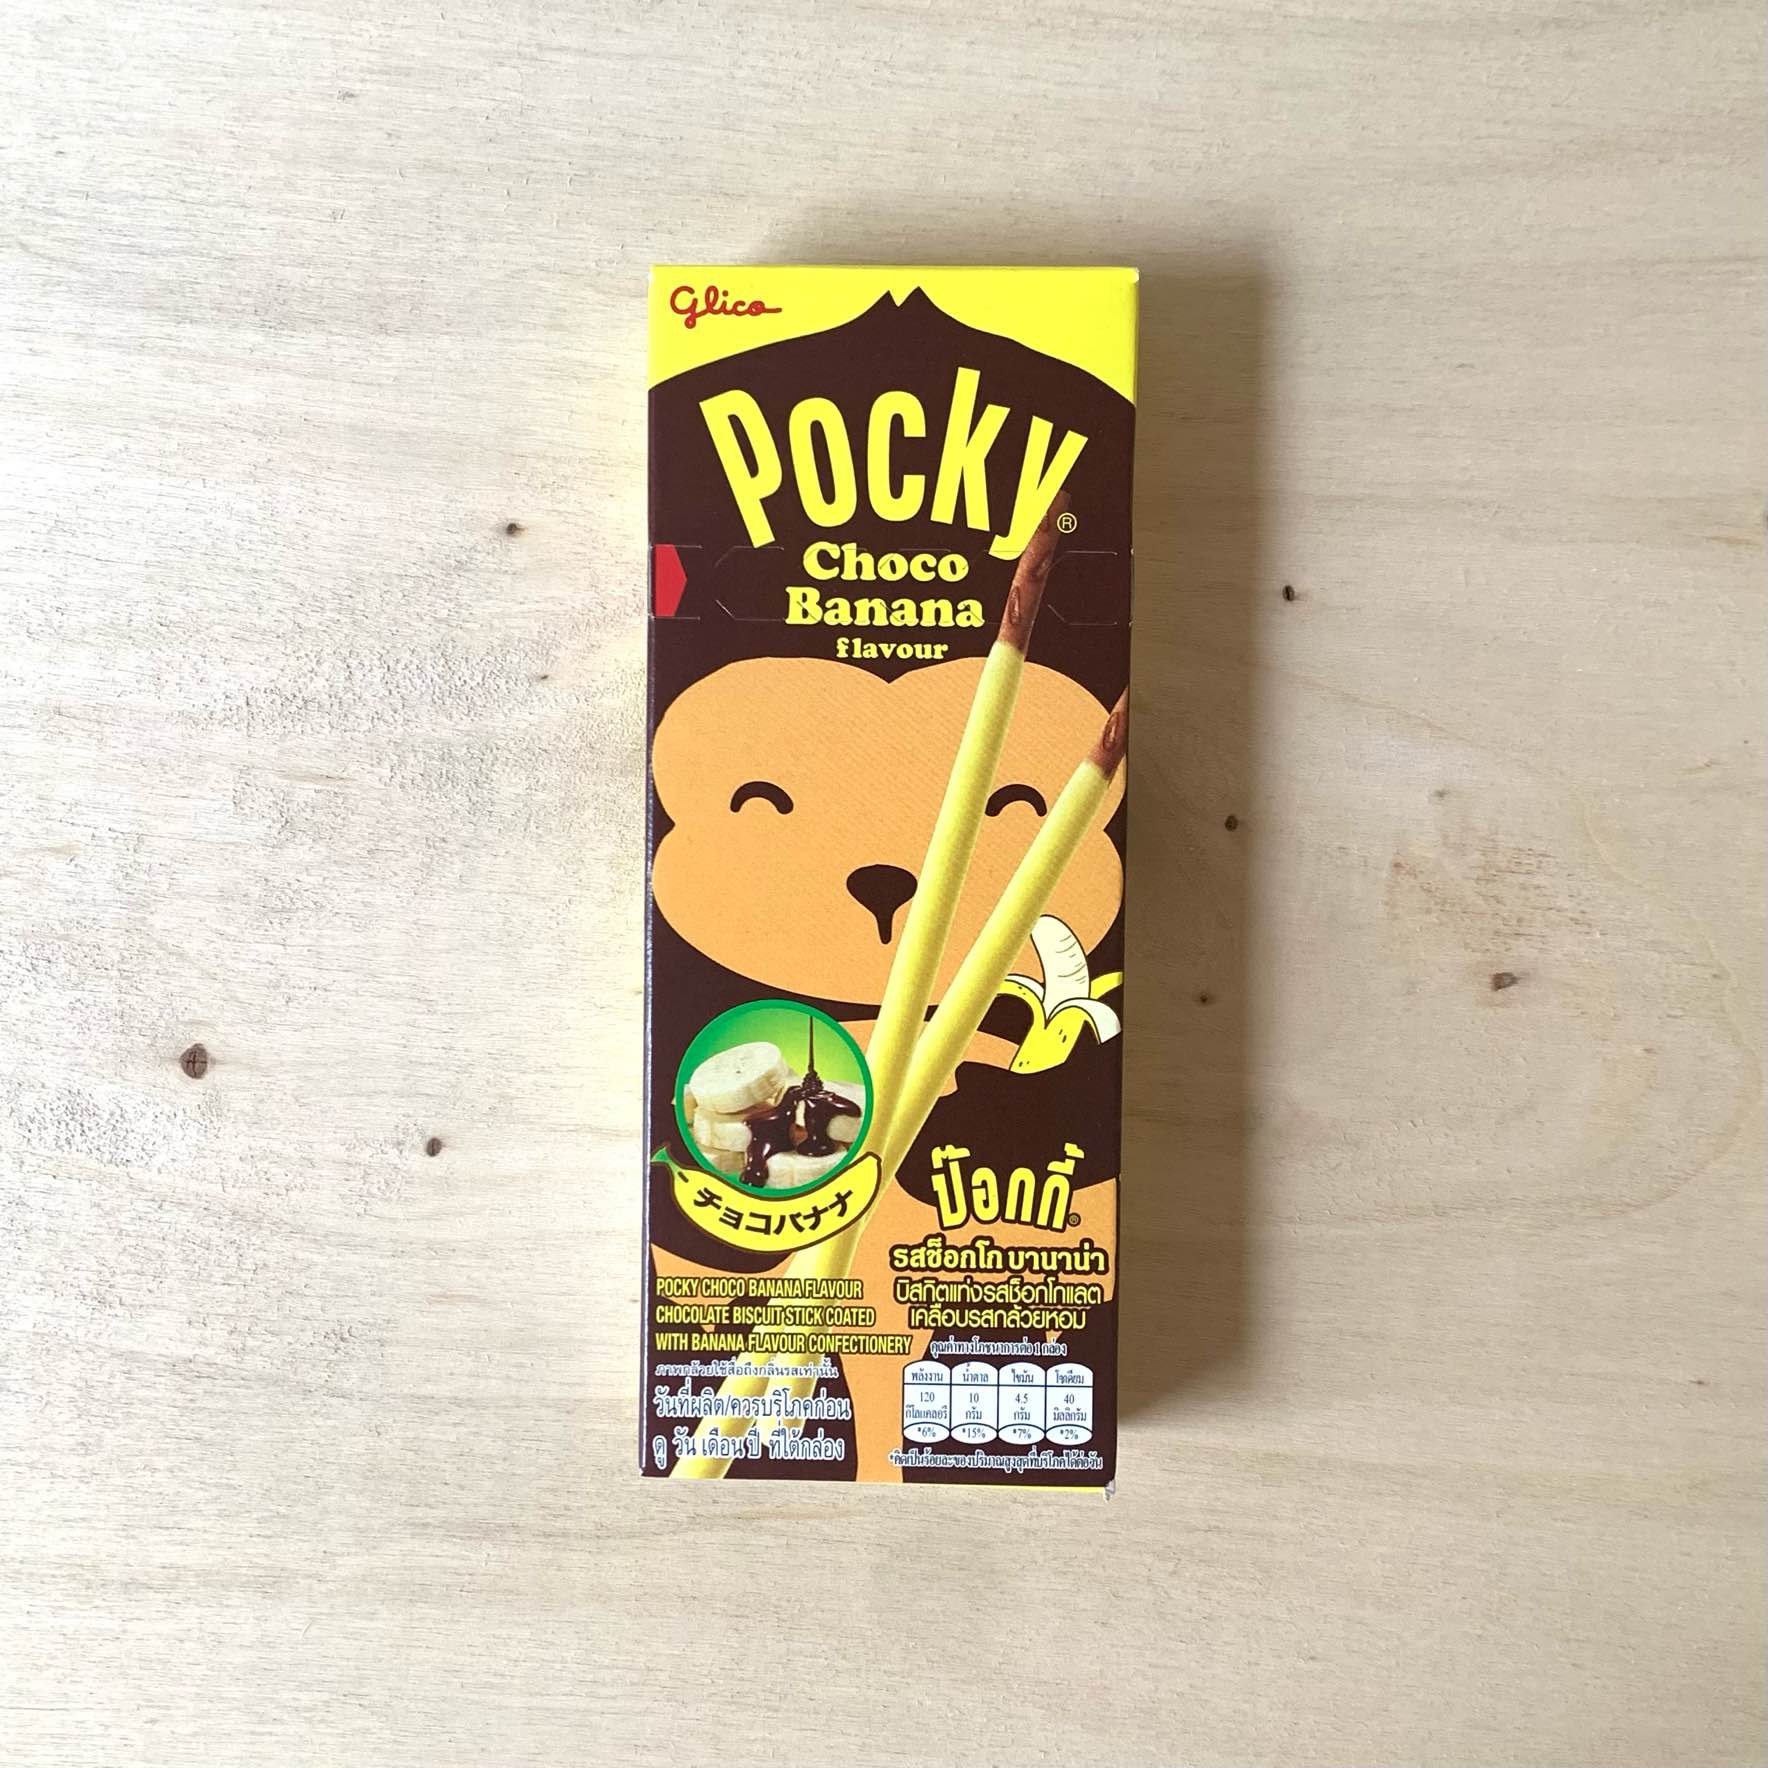 Pocky Chocolate Banana Flavor Biscuit Stick 25g - Glico